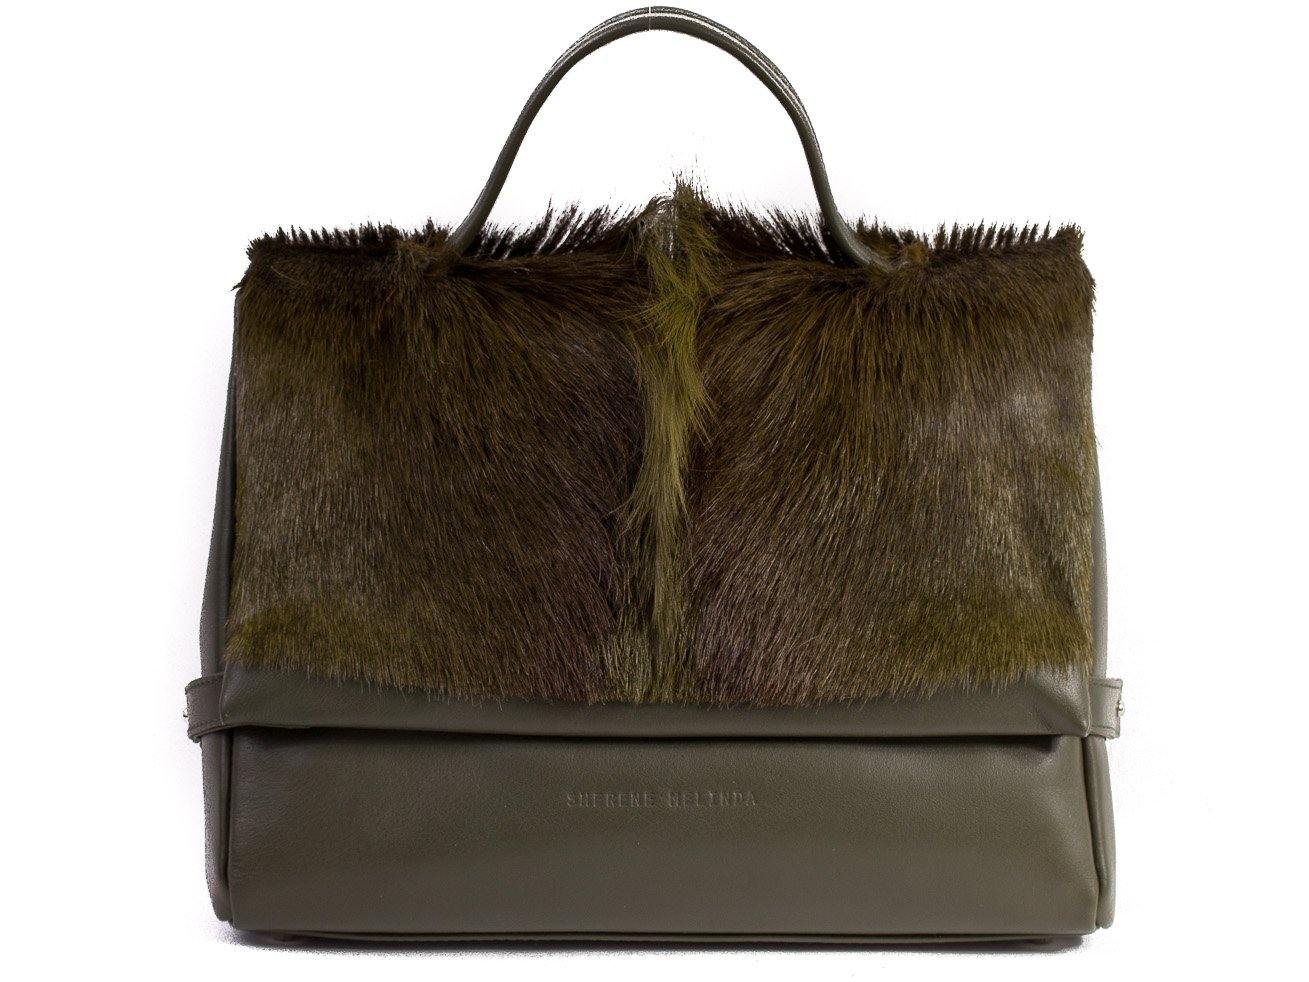 sherene melinda springbok hair-on-hide green leather smith tote bag Fan front